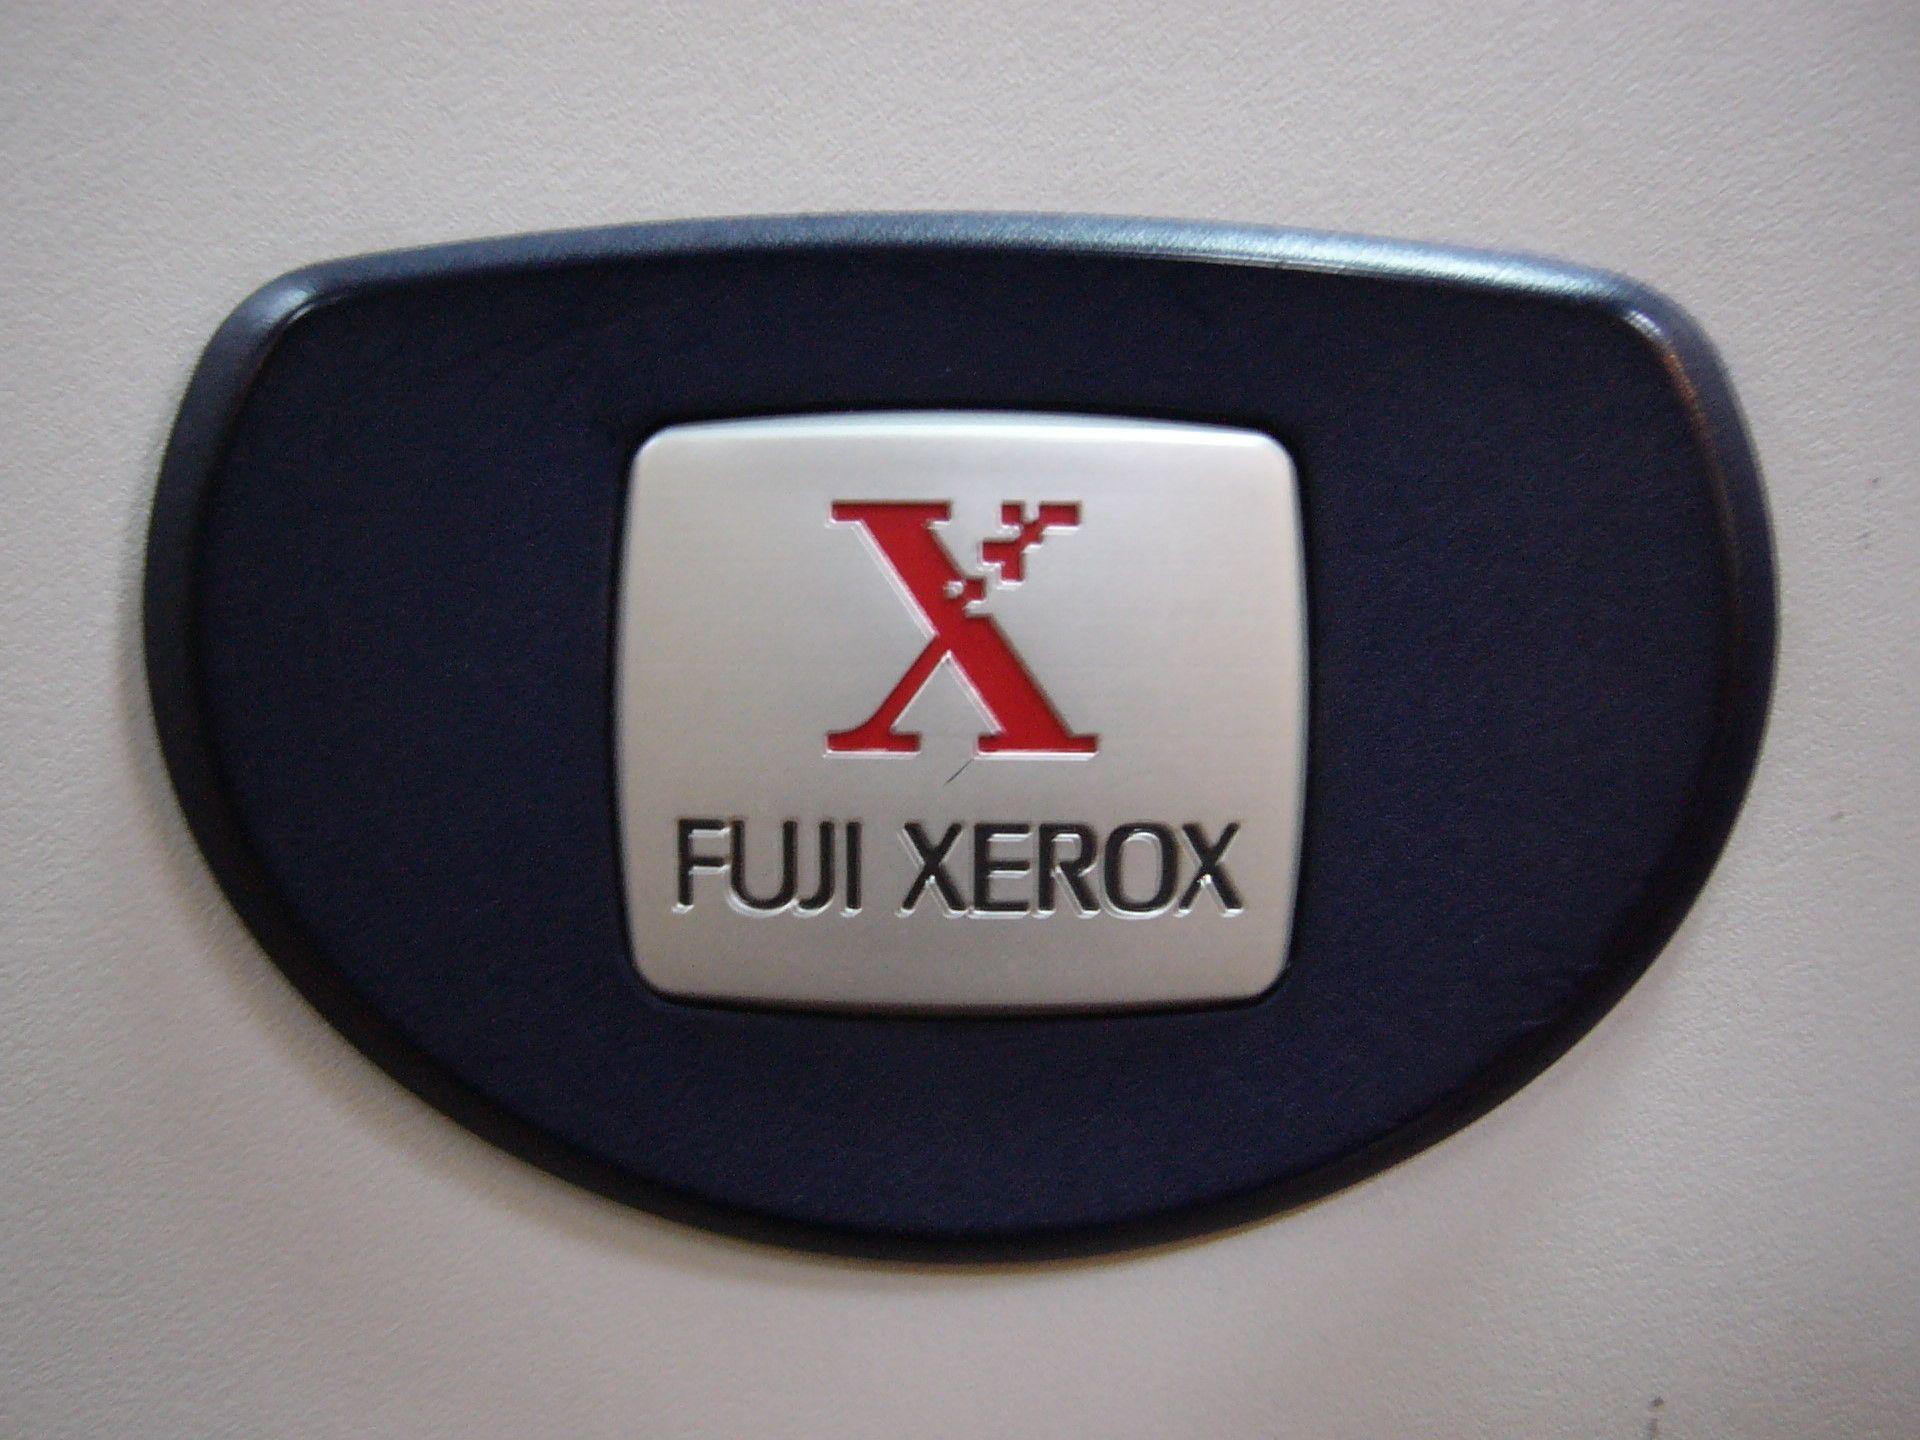 Fuji Xerox Logo - File:Fuji Xerox logo on Document Centre 505.jpg - Wikimedia Commons